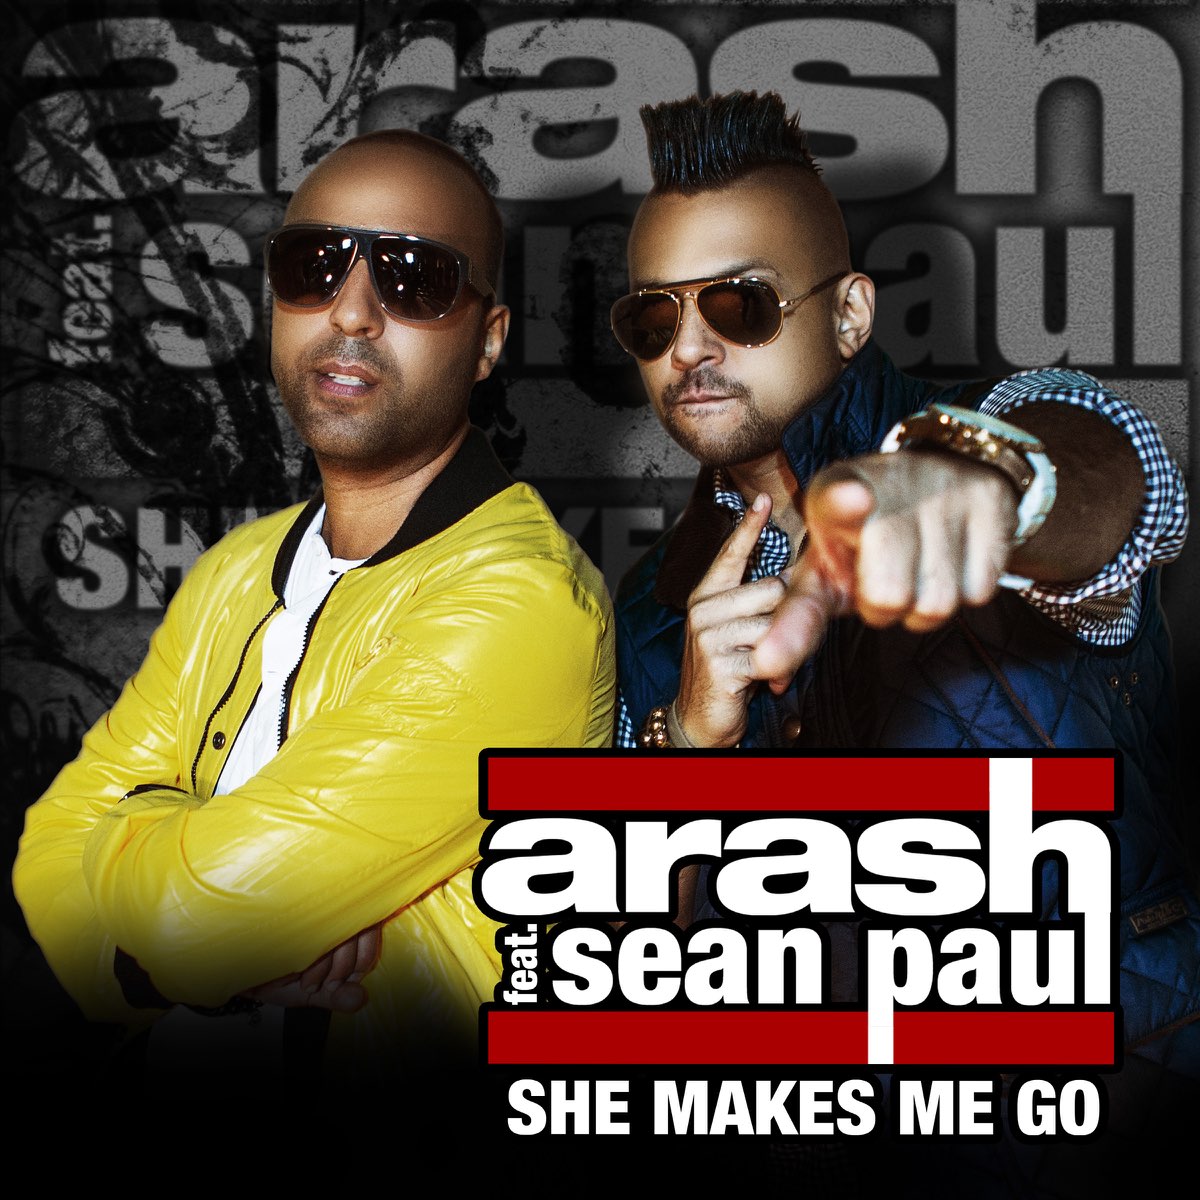 Песня up sean paul. Paul Arash. Arash ft Sean Paul - she makes me go. Араш Шон Паул. Араш альбомы.